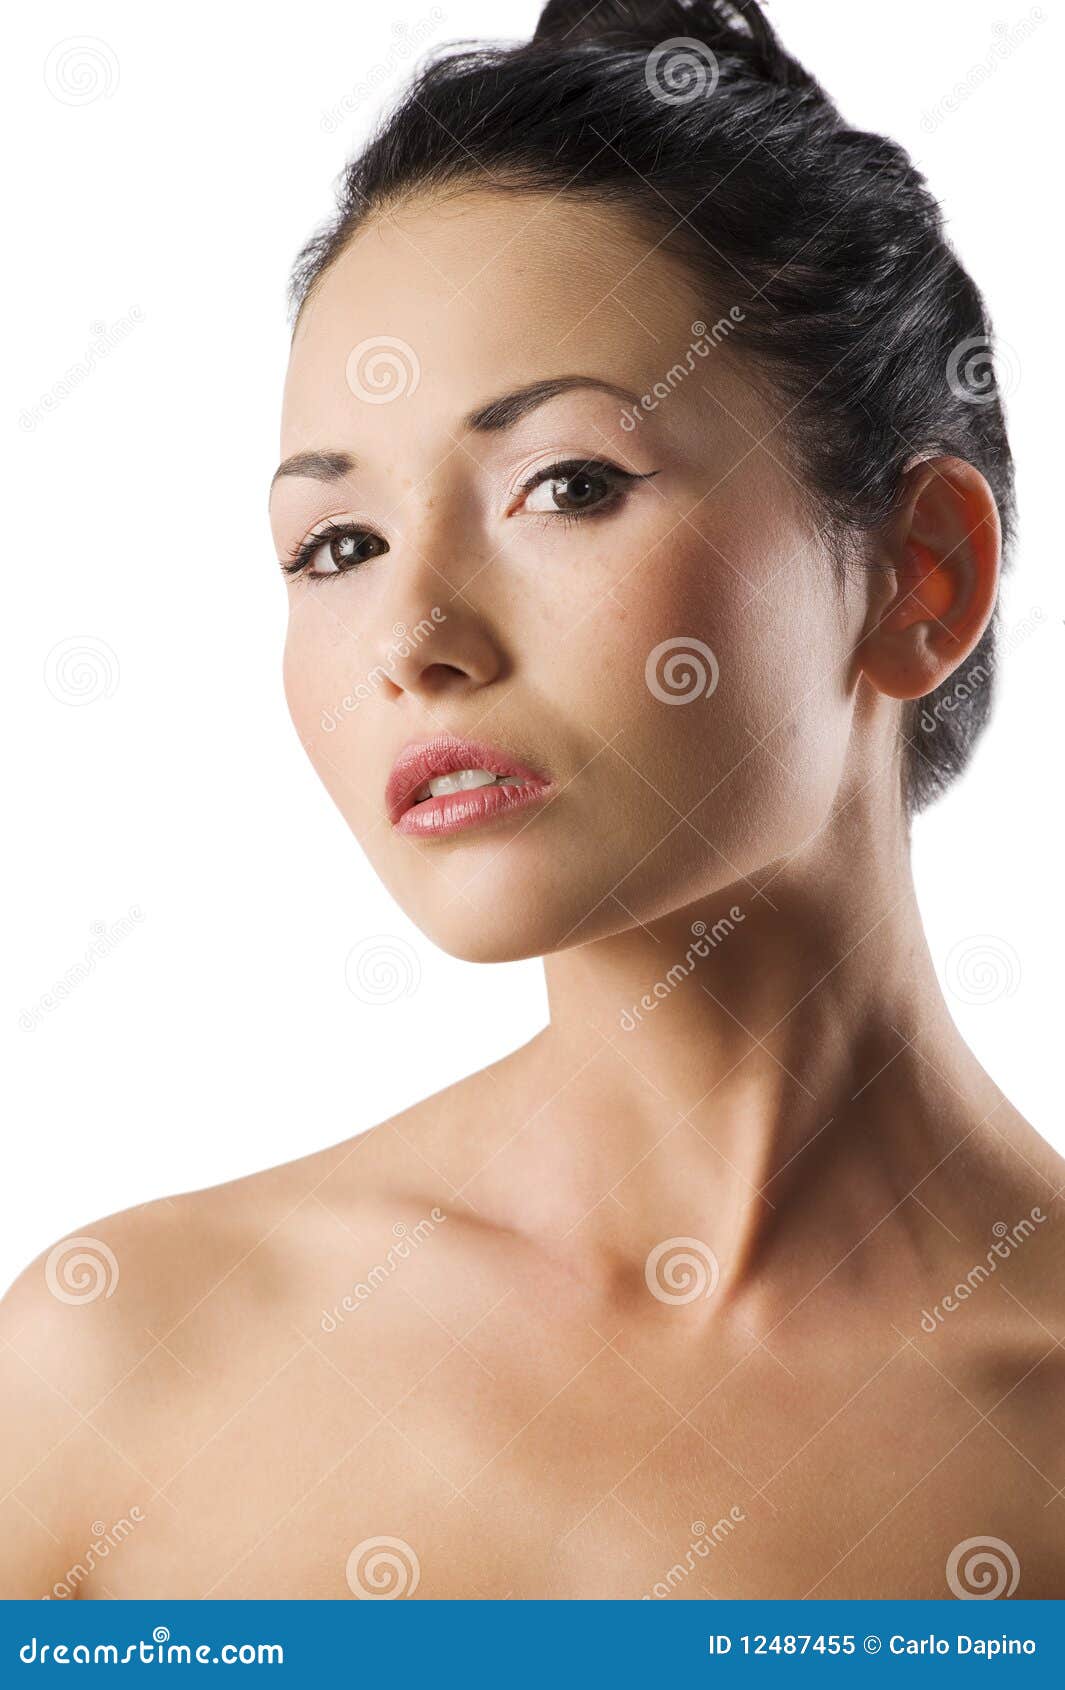 Classic Asian Beauty Nude - Beauty asian portrait stock image. Image of beautiful - 12487455